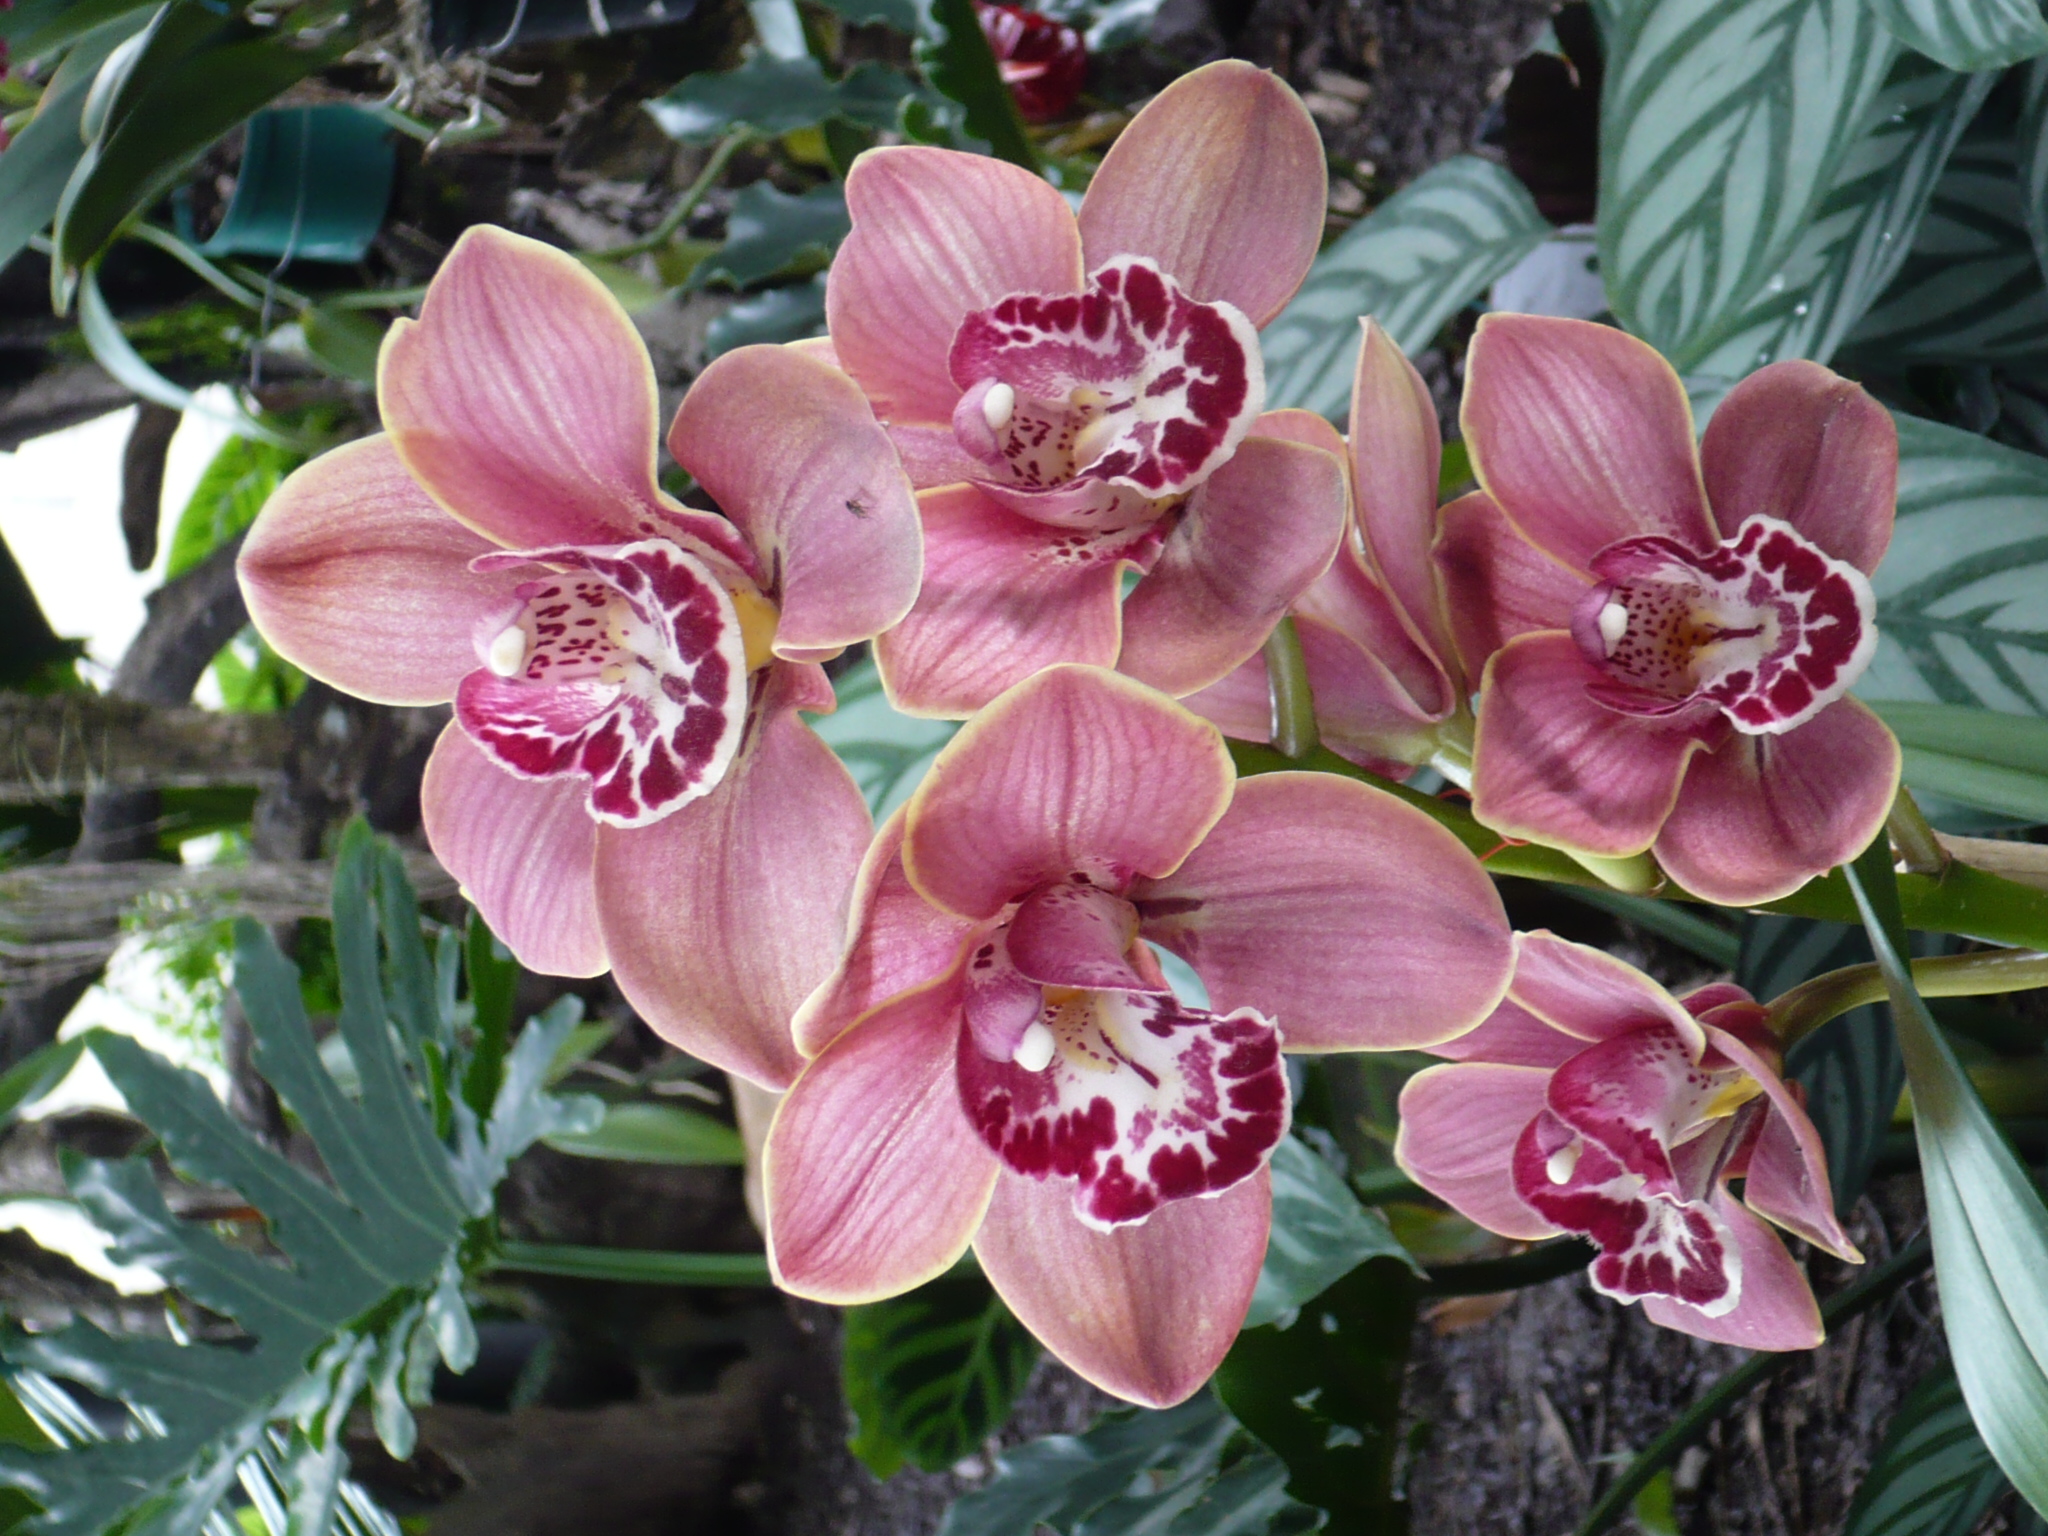 File:Orquídea-1.jpg - Wikimedia Commons